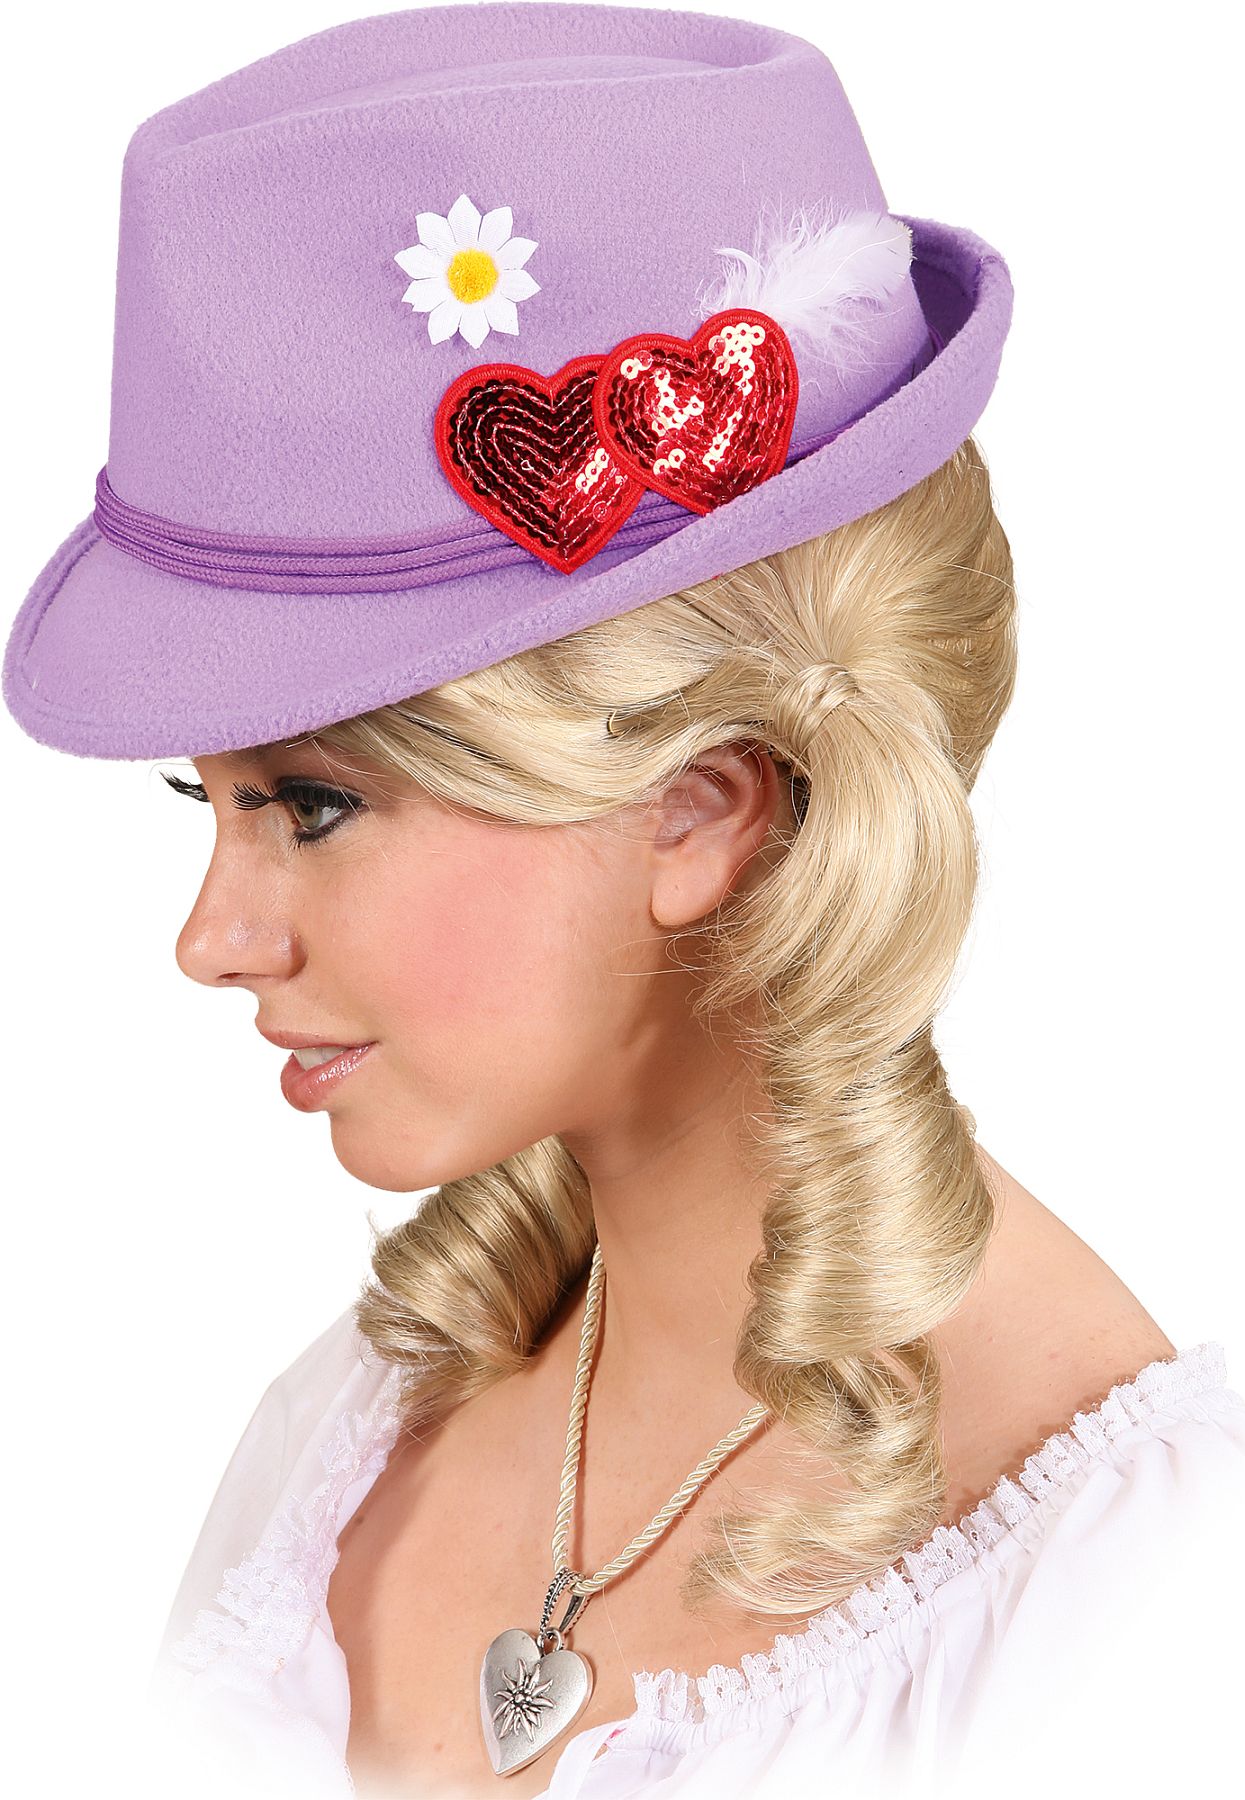 Bavarian lady hat, purple